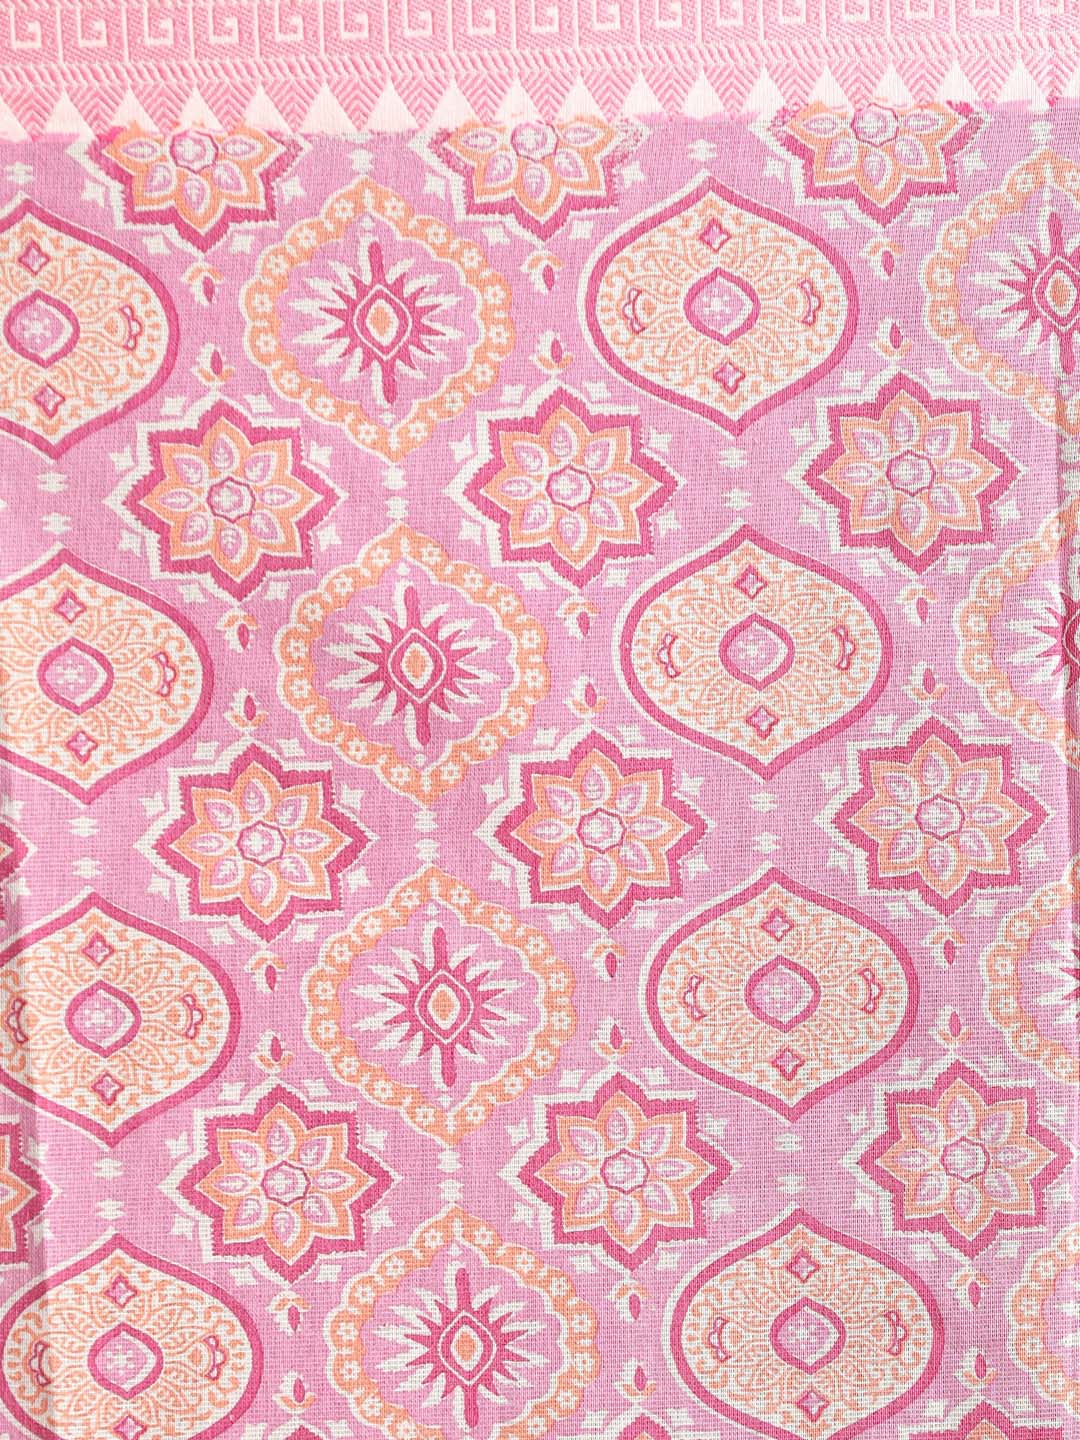 Indethnic Printed Cotton Blend Saree in Lavender - Saree Detail View